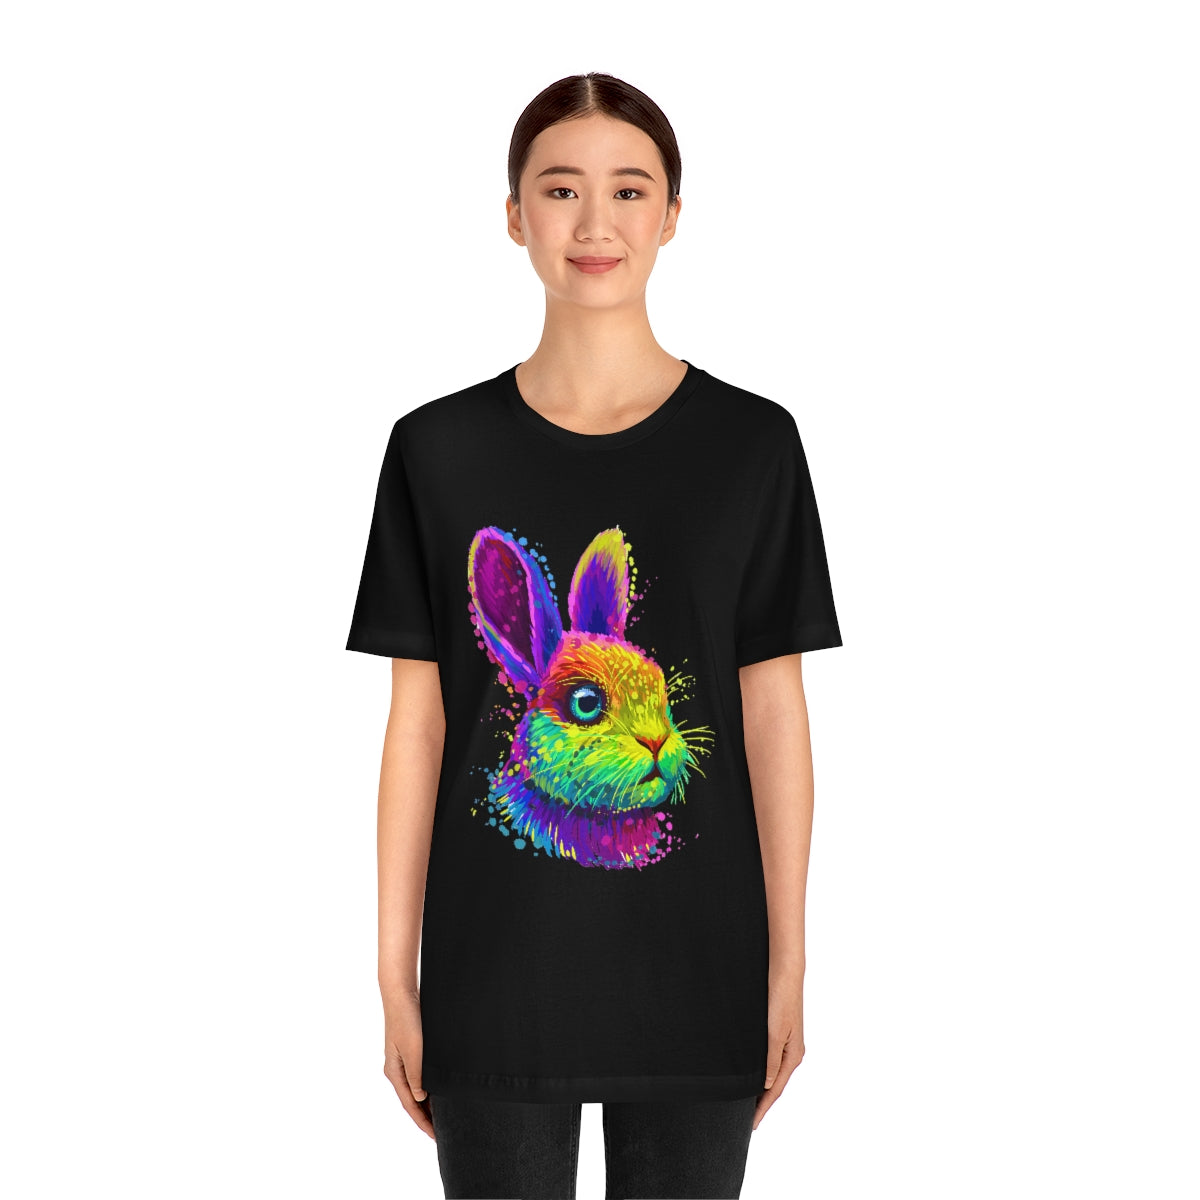 Unisex Jersey Short Sleeve Tee "Abstract colorful little rabbit"